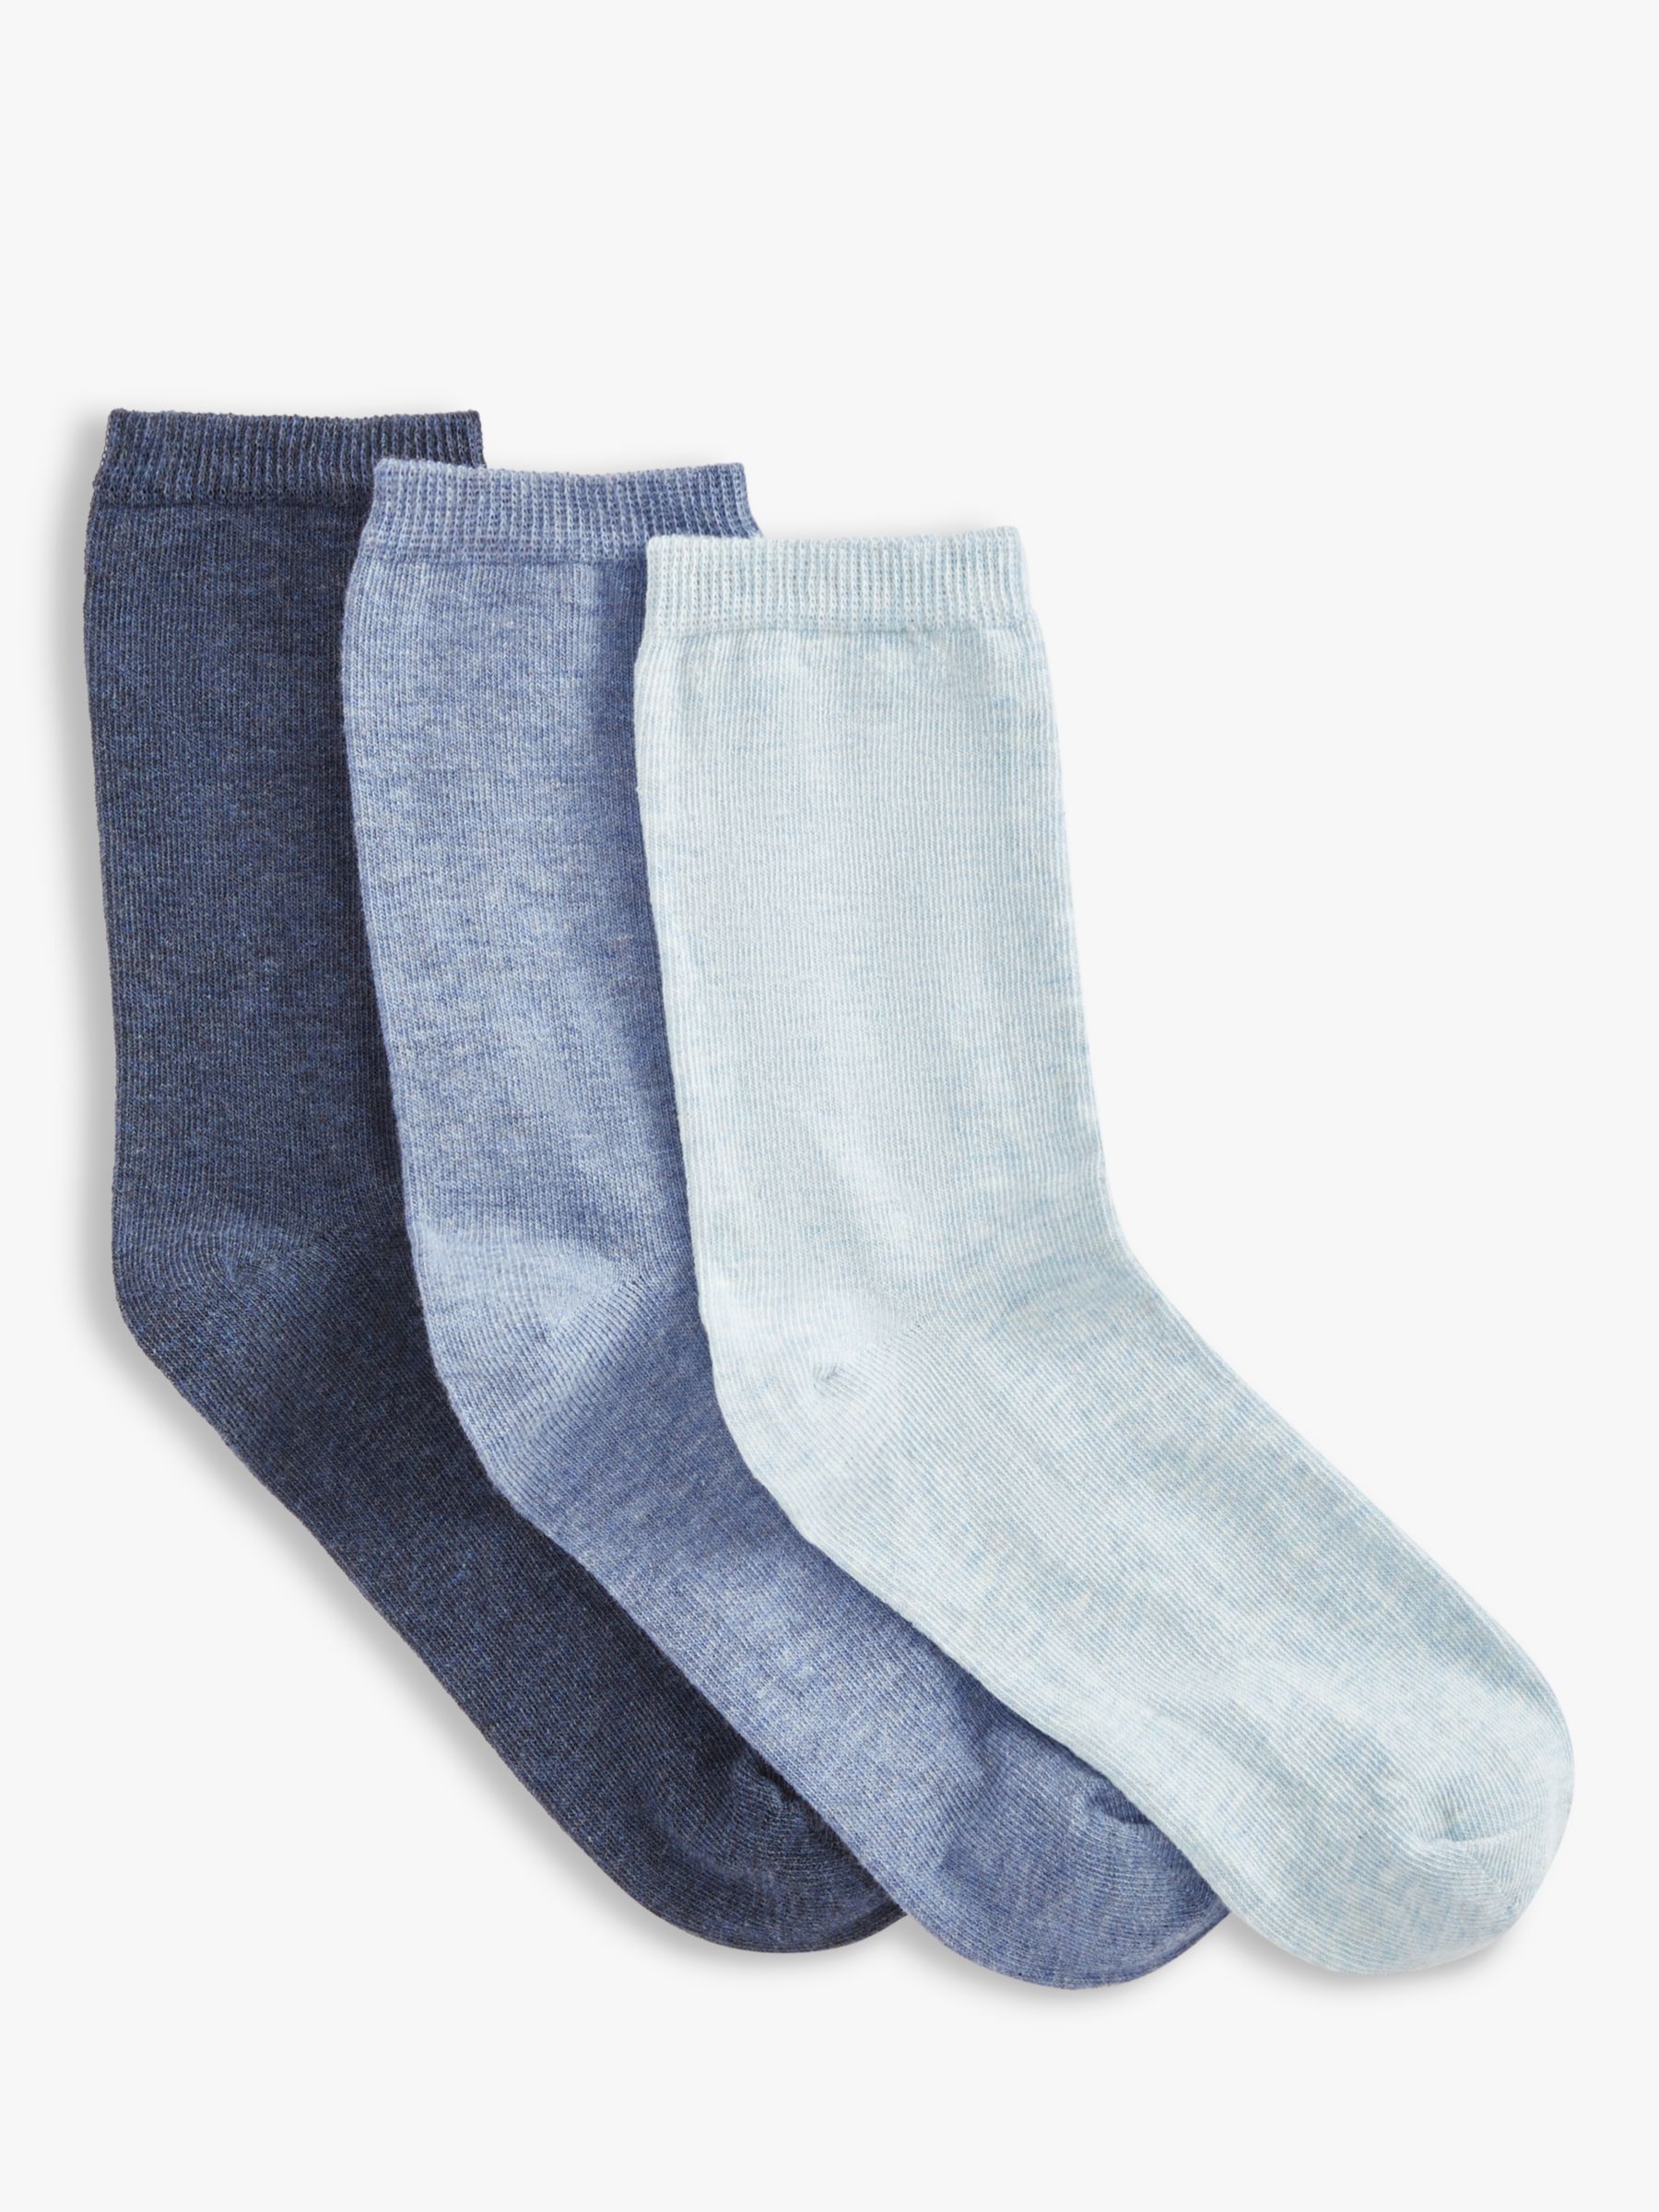 Buy John Lewis Organic Cotton Mix Ankle Socks, Pack of 3 Online at johnlewis.com